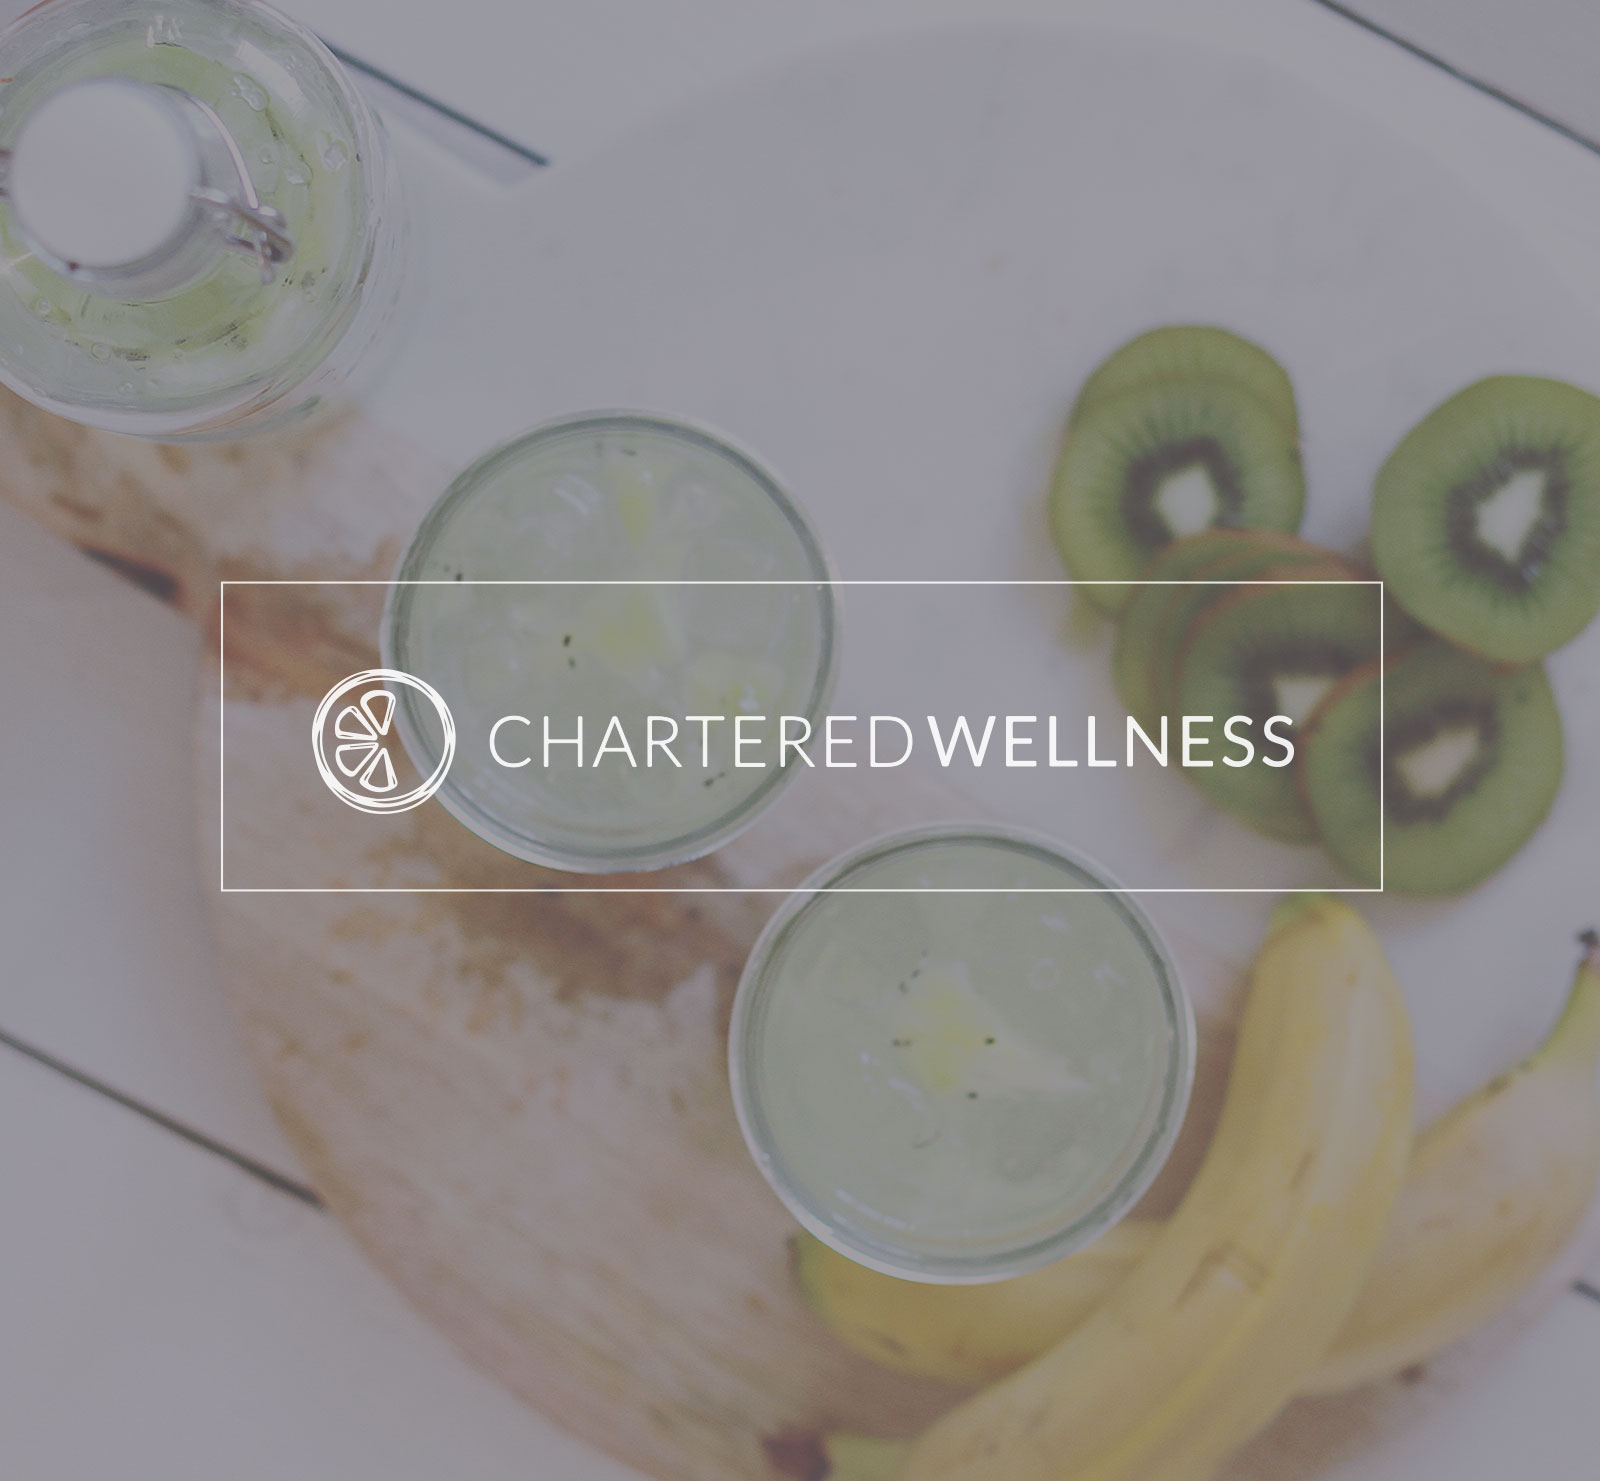 chartered wellness brand